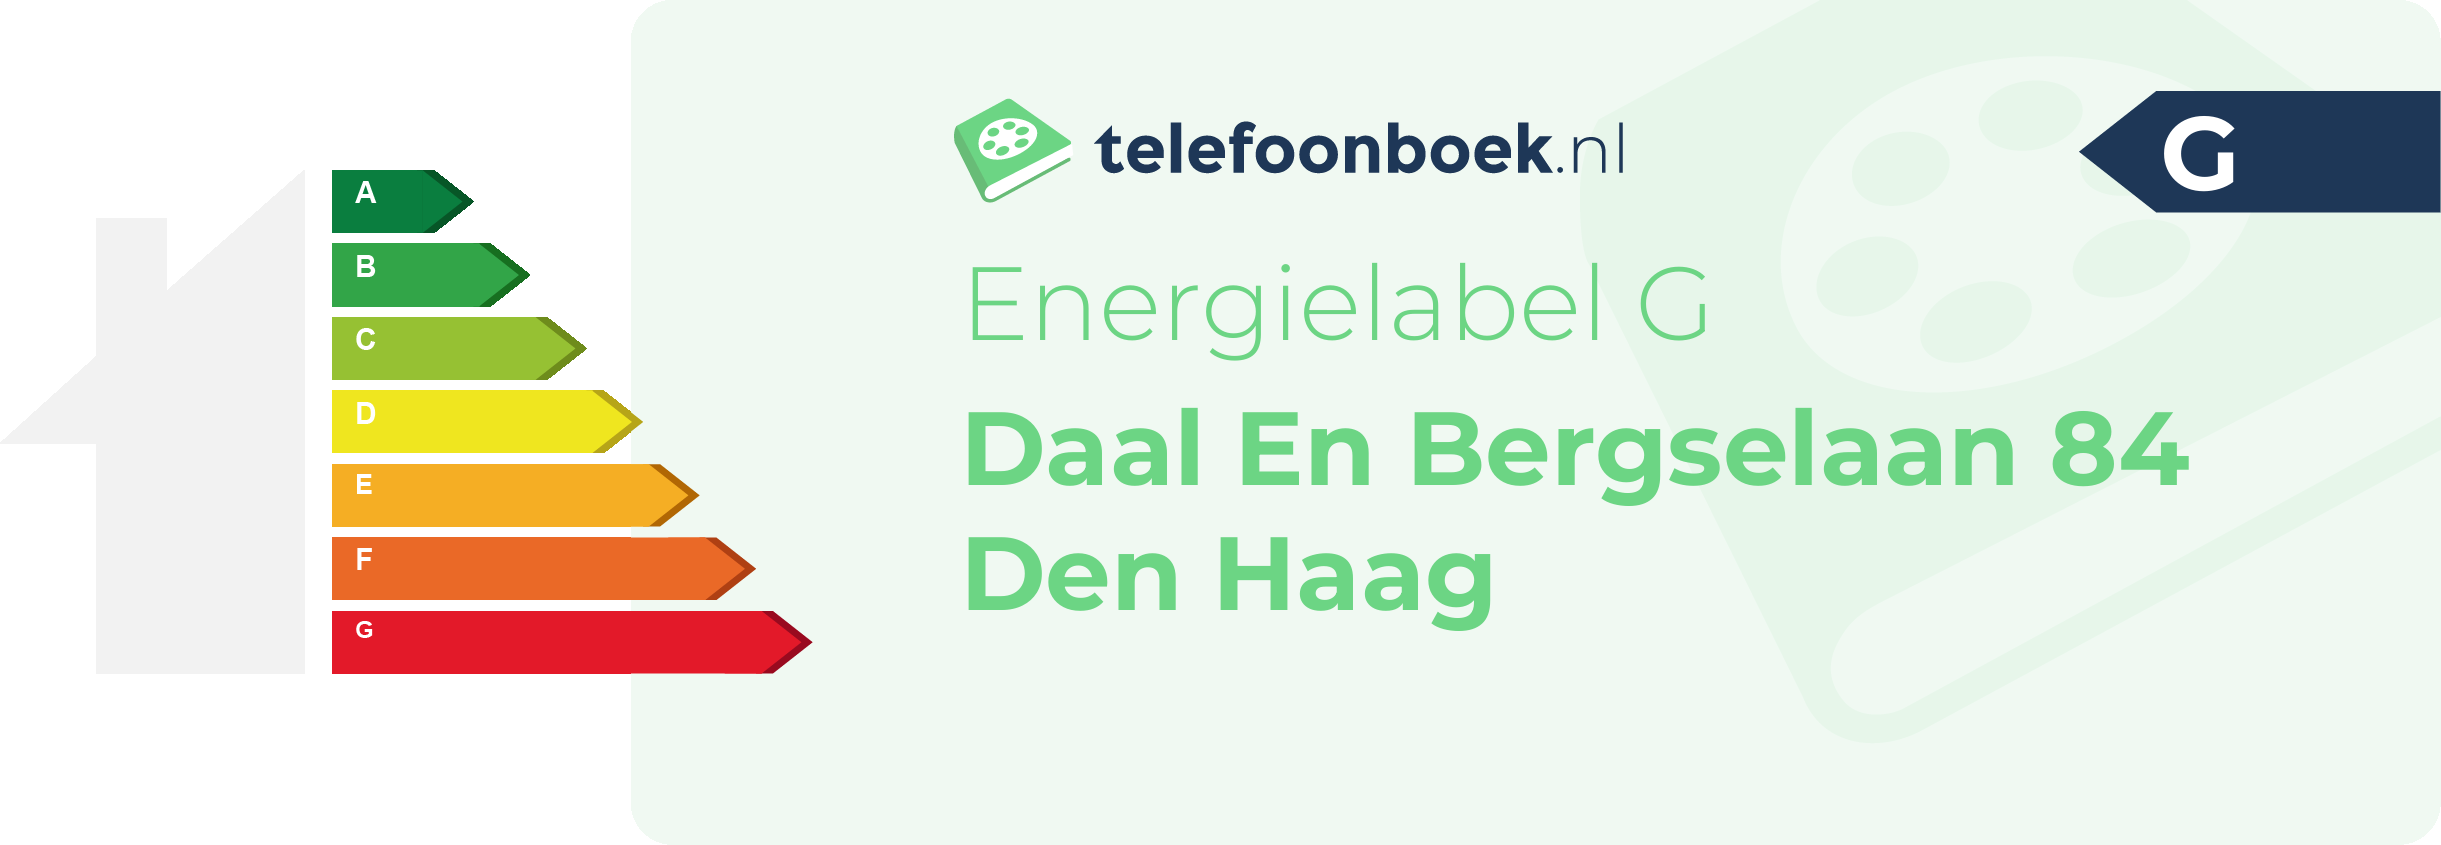 Energielabel Daal En Bergselaan 84 Den Haag